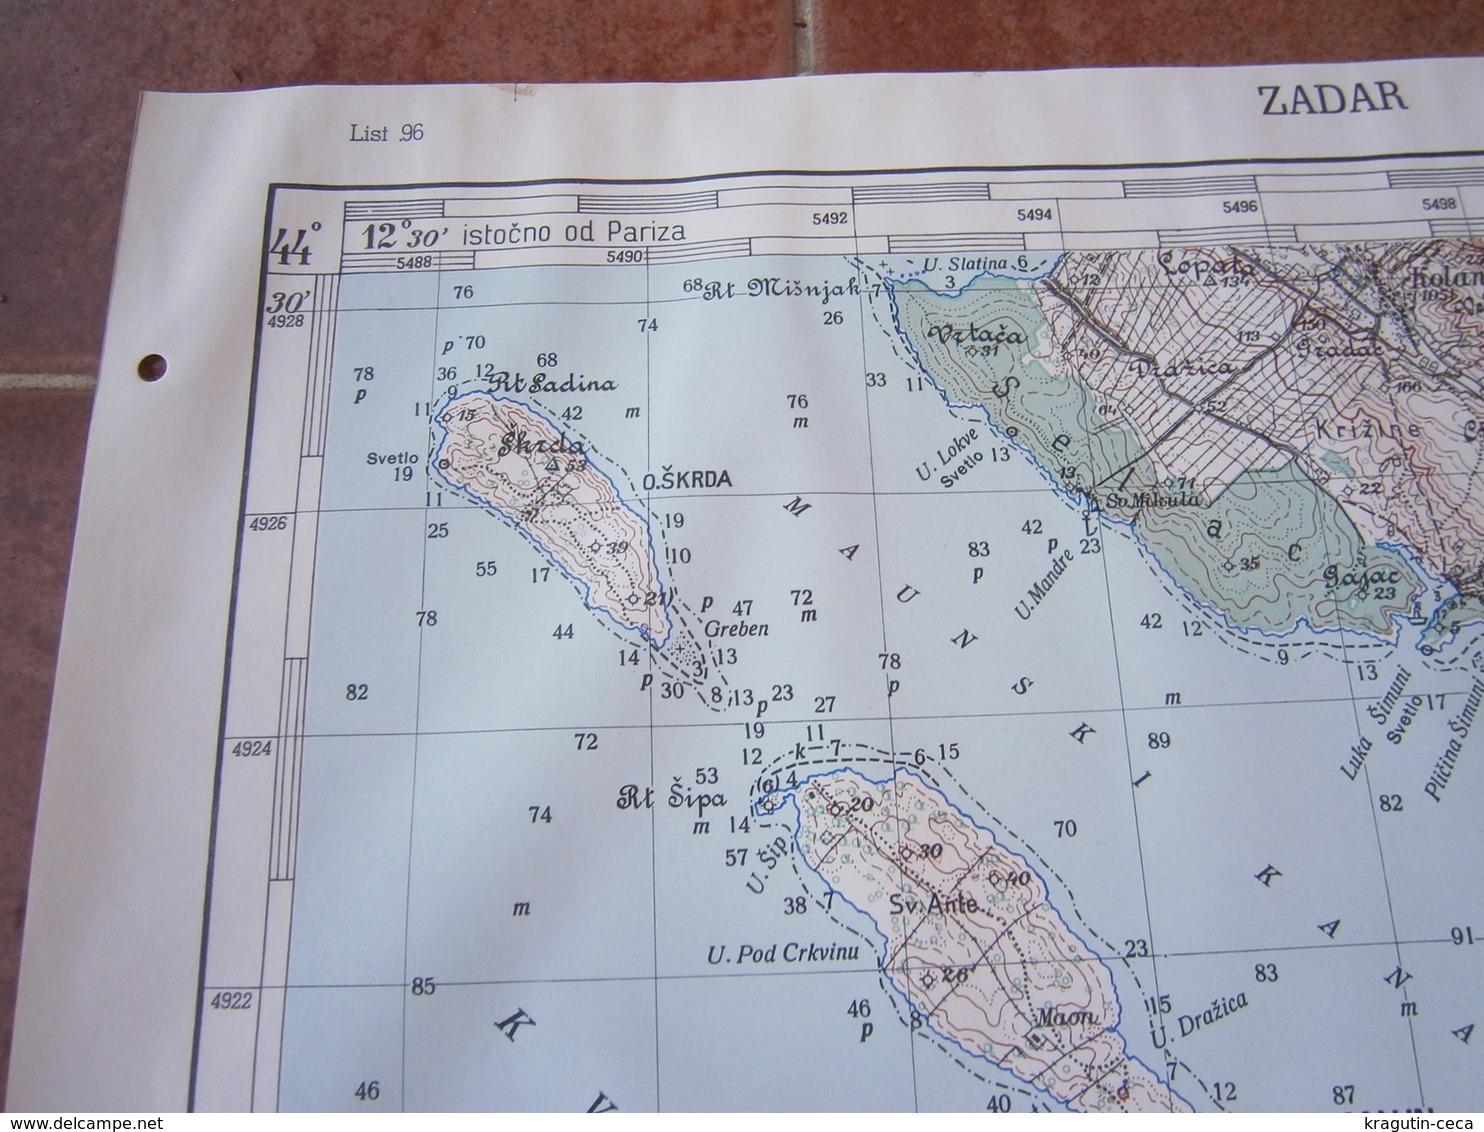 1952 ZADAR CROATIA JNA YUGOSLAVIA ARMY MAP MILITARY CHART PLAN ADRIATIC SEA VIR MAUN KVARNER ISLAND SV TOMA BRUŠNJAK